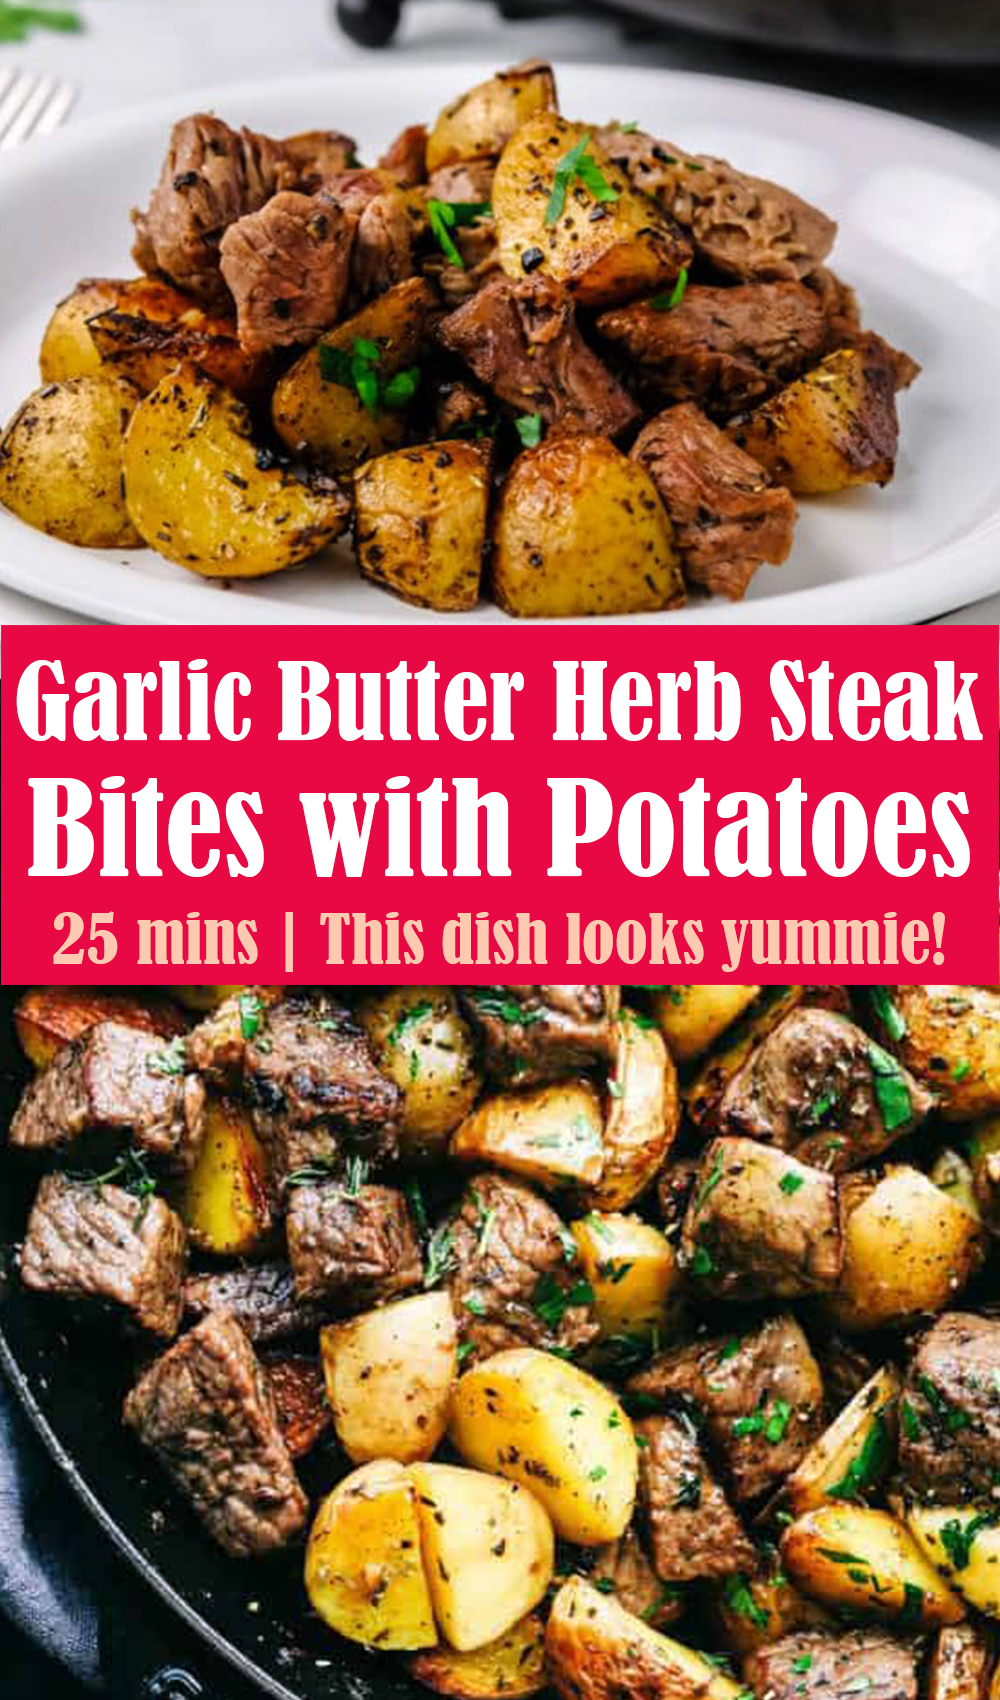 Garlic Butter Herb Steak Bites with Potatoes